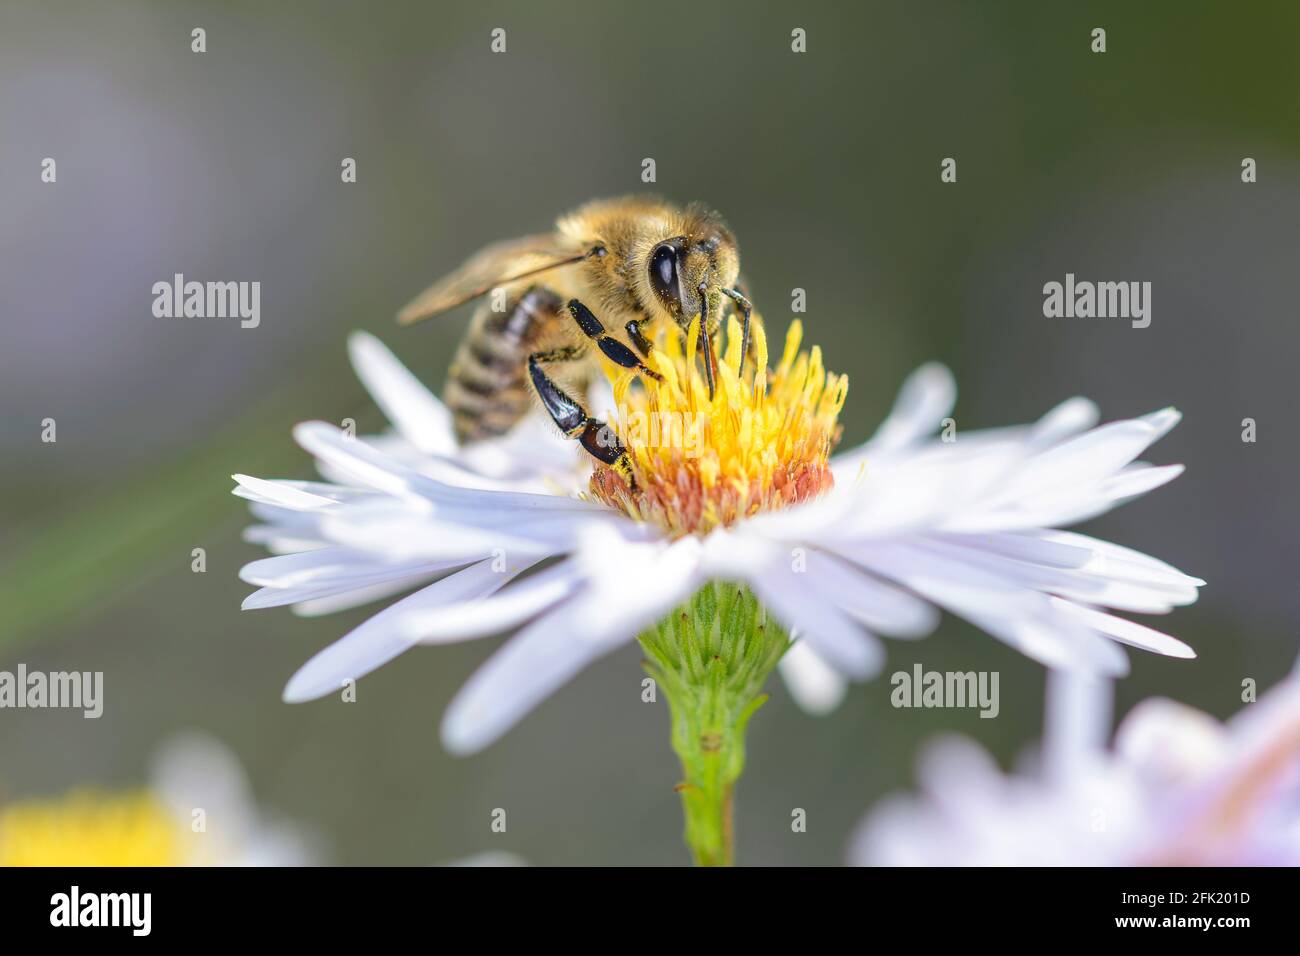 Bee - Apis Mellifera - Pollinates A Blossom Of The New York Aster - Symphyotrichum Novi-belgii Stock Photo